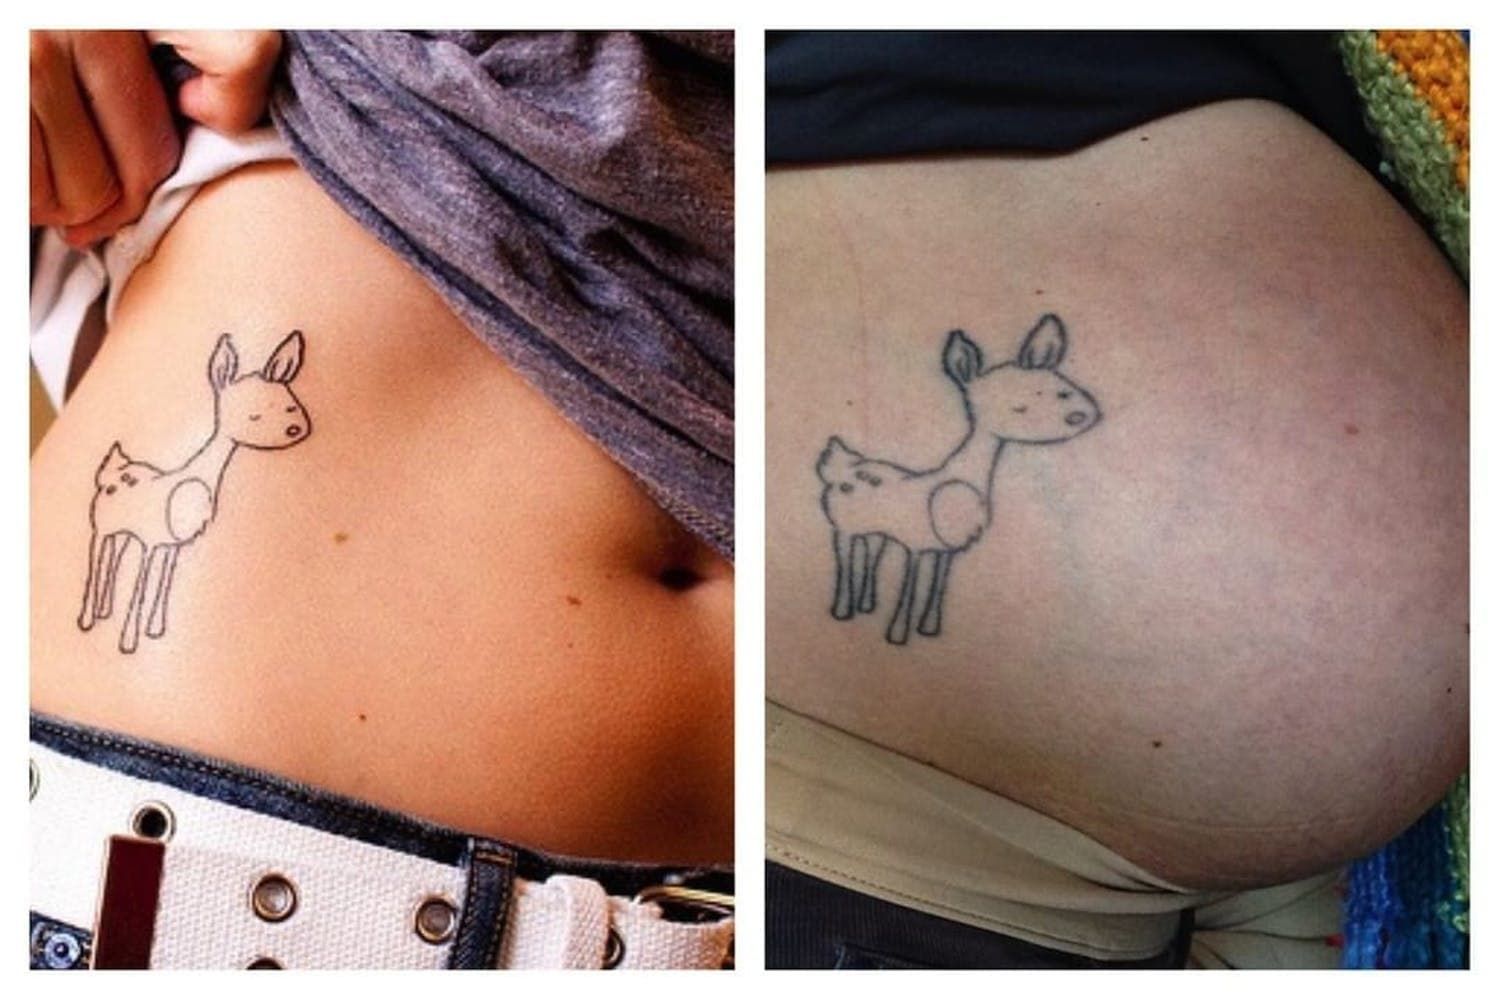 tattoos before vs after (Pre pregnancy vs 5 months pregnant vs 4 months PP)  : r/agedtattoos